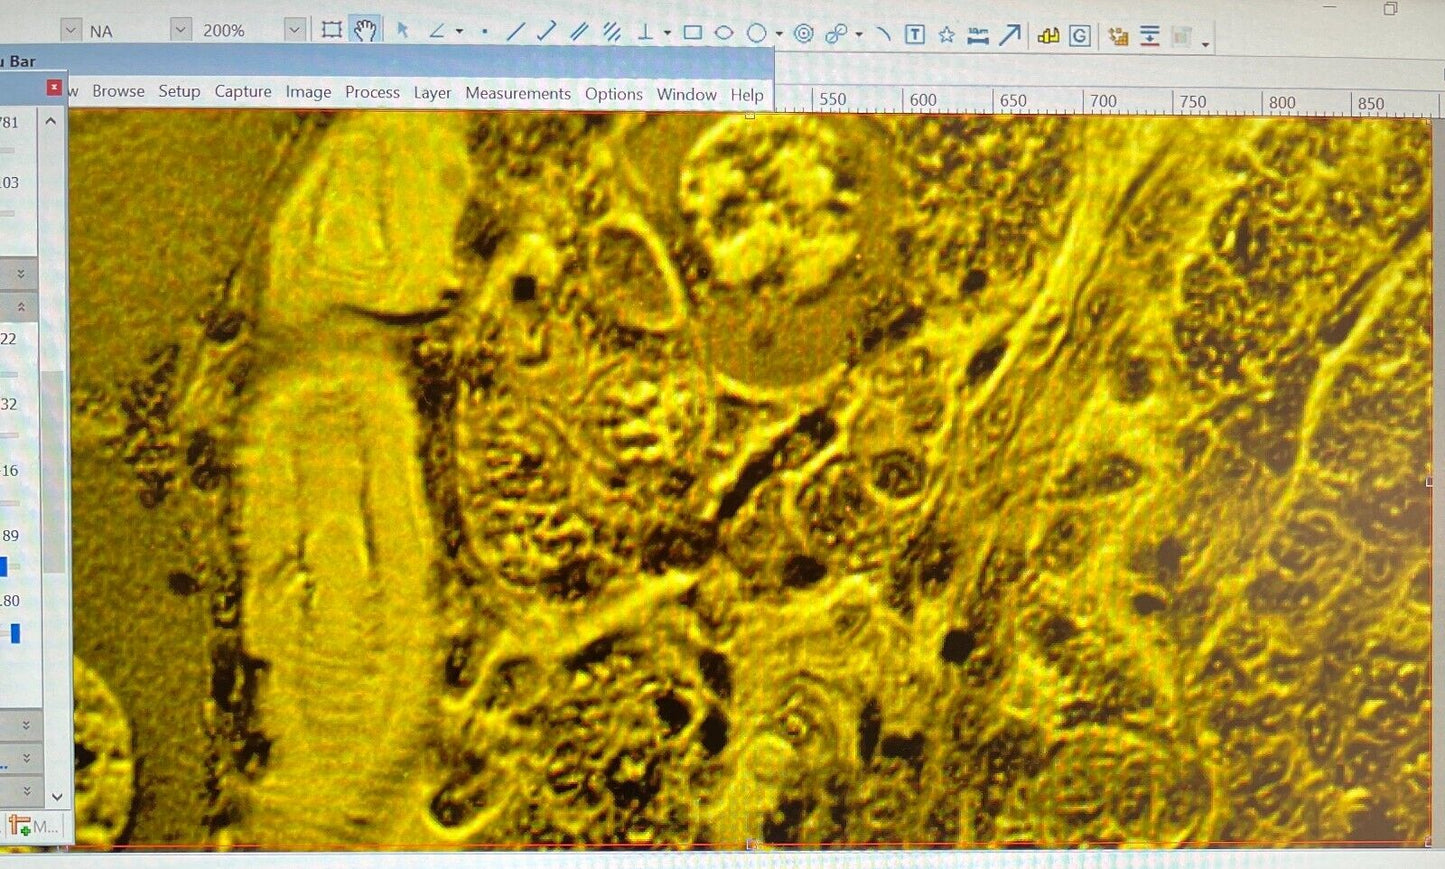 Leica DMR E Nomarski DIC Fluoresence Phase Contrast Microscope + 10MP Camera